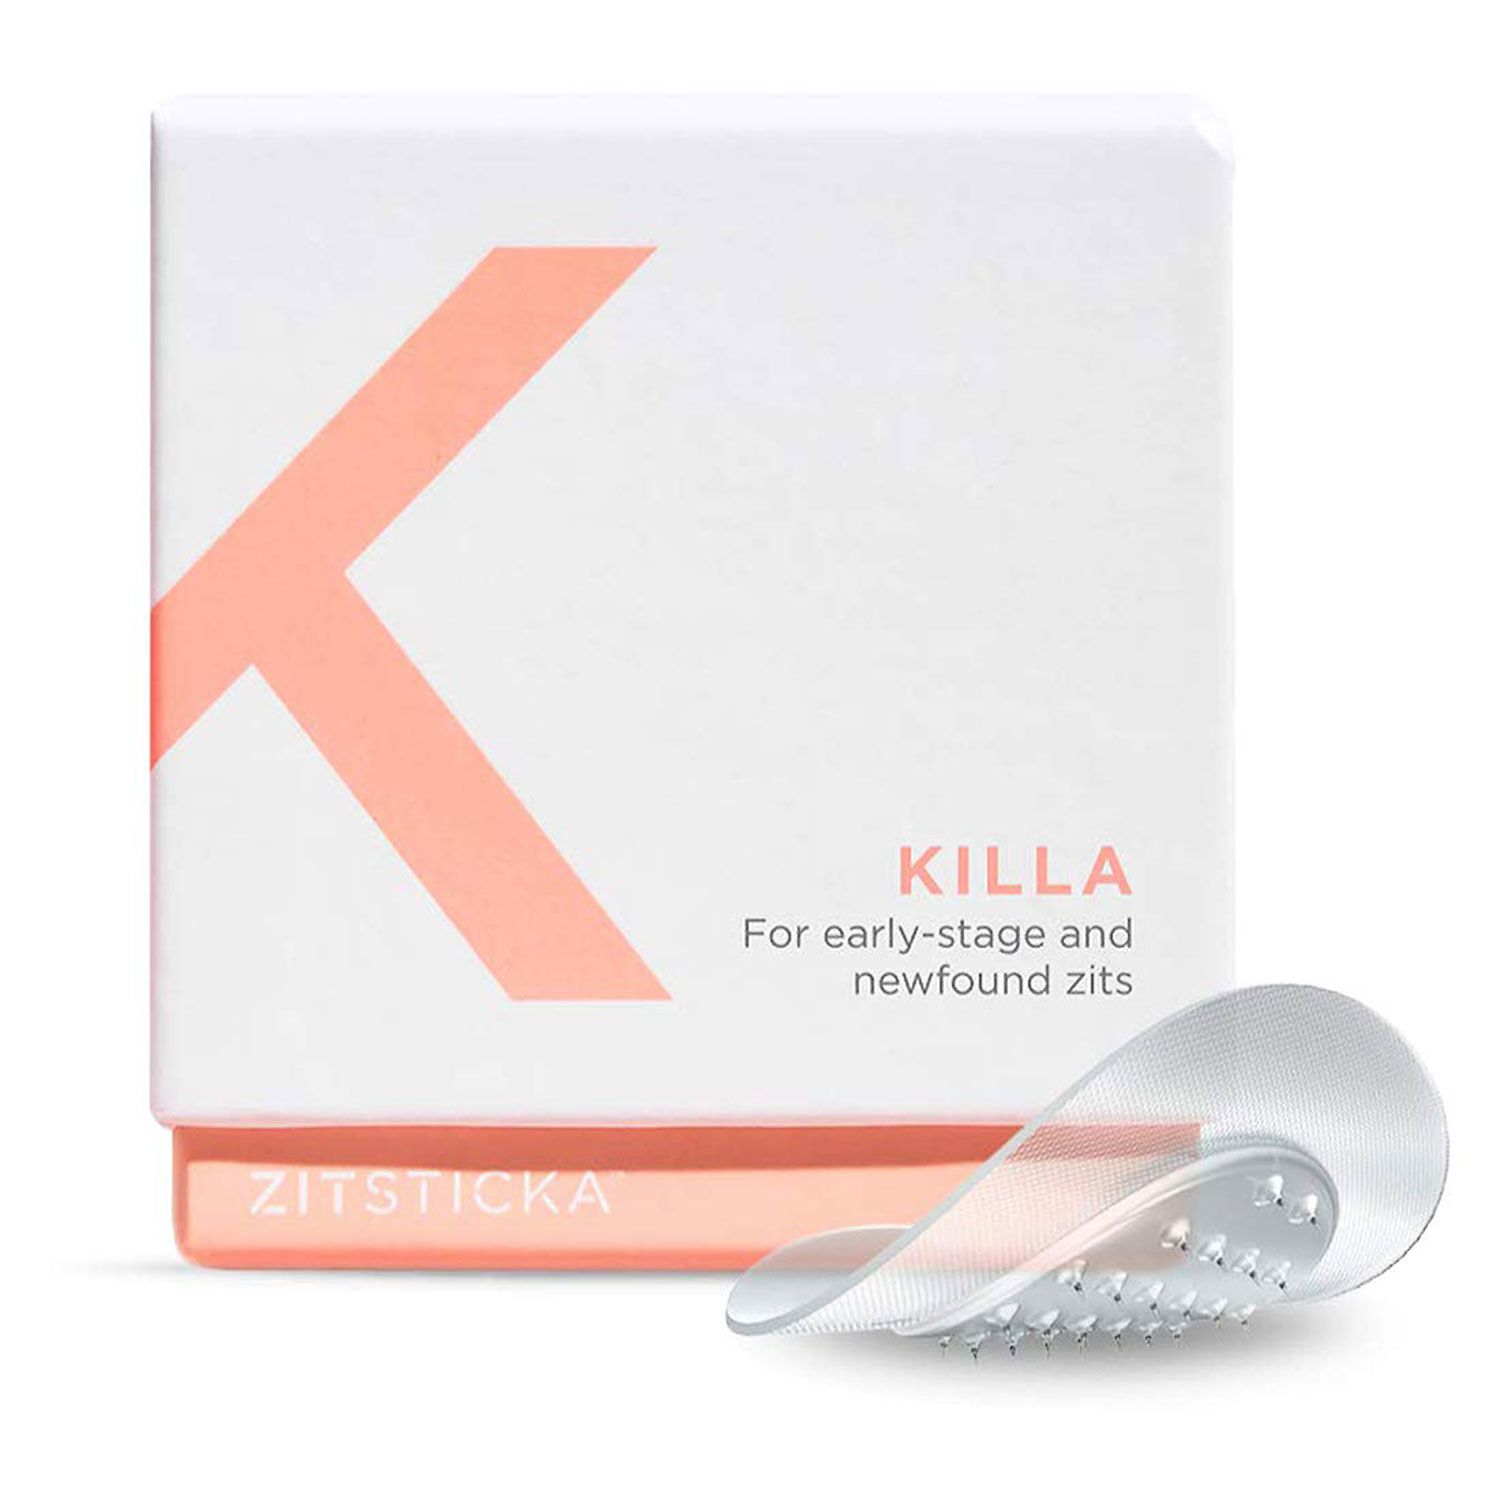 Translucent Microneedle Pimple Patch Killa Kit by ZitSticka